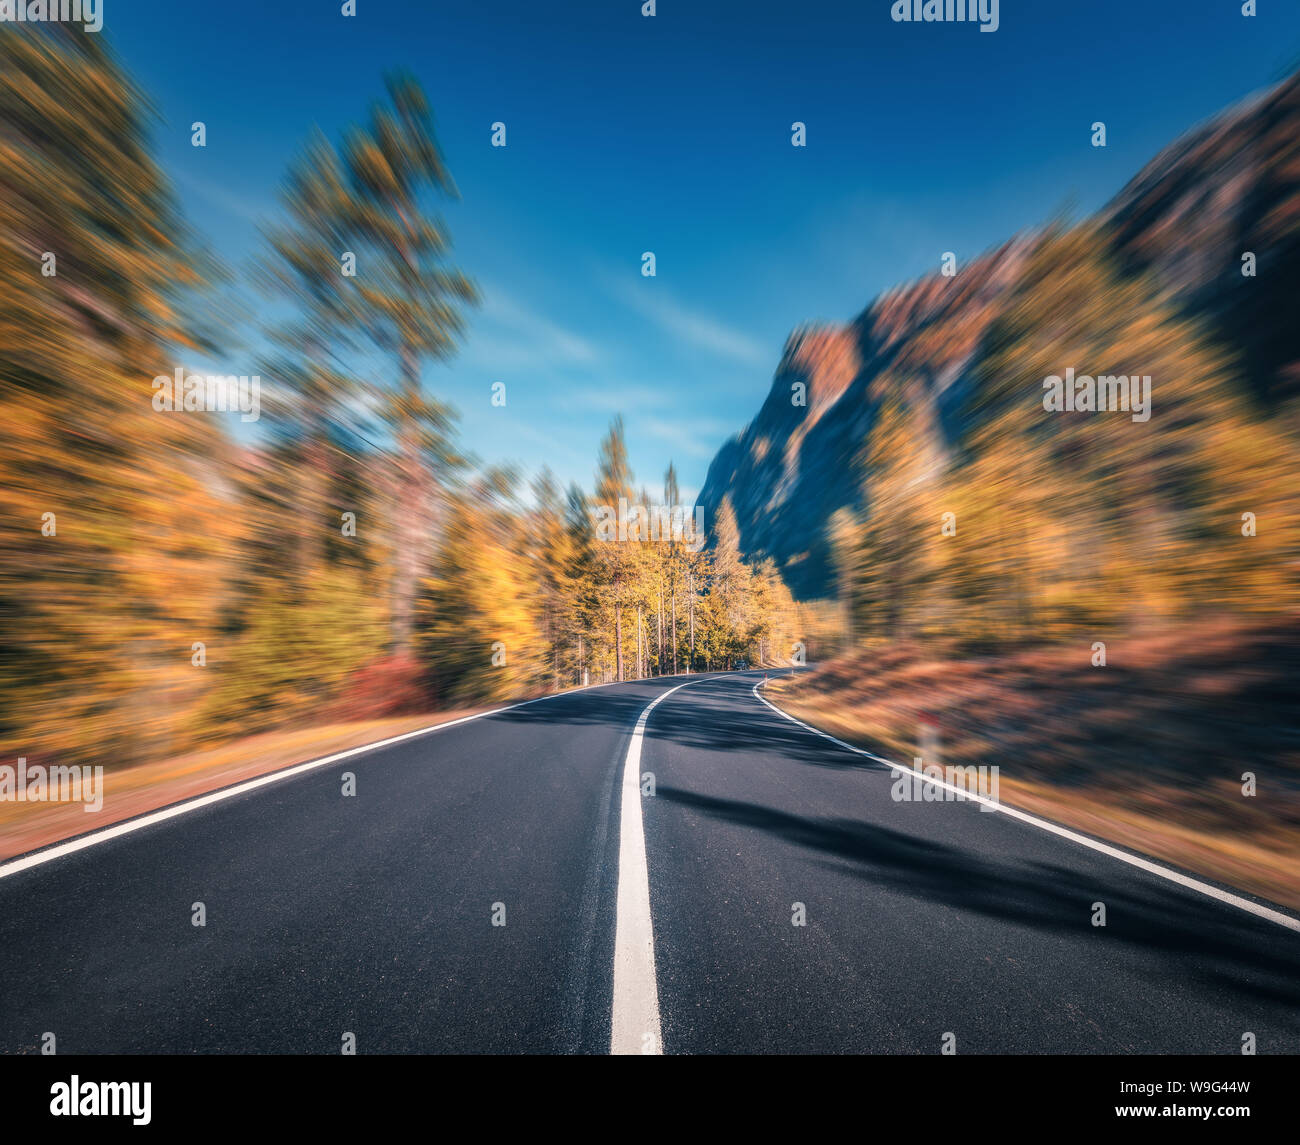 Mountain Road im Herbst Wald bei Sonnenuntergang mit Motion blur Effekt Stockfoto